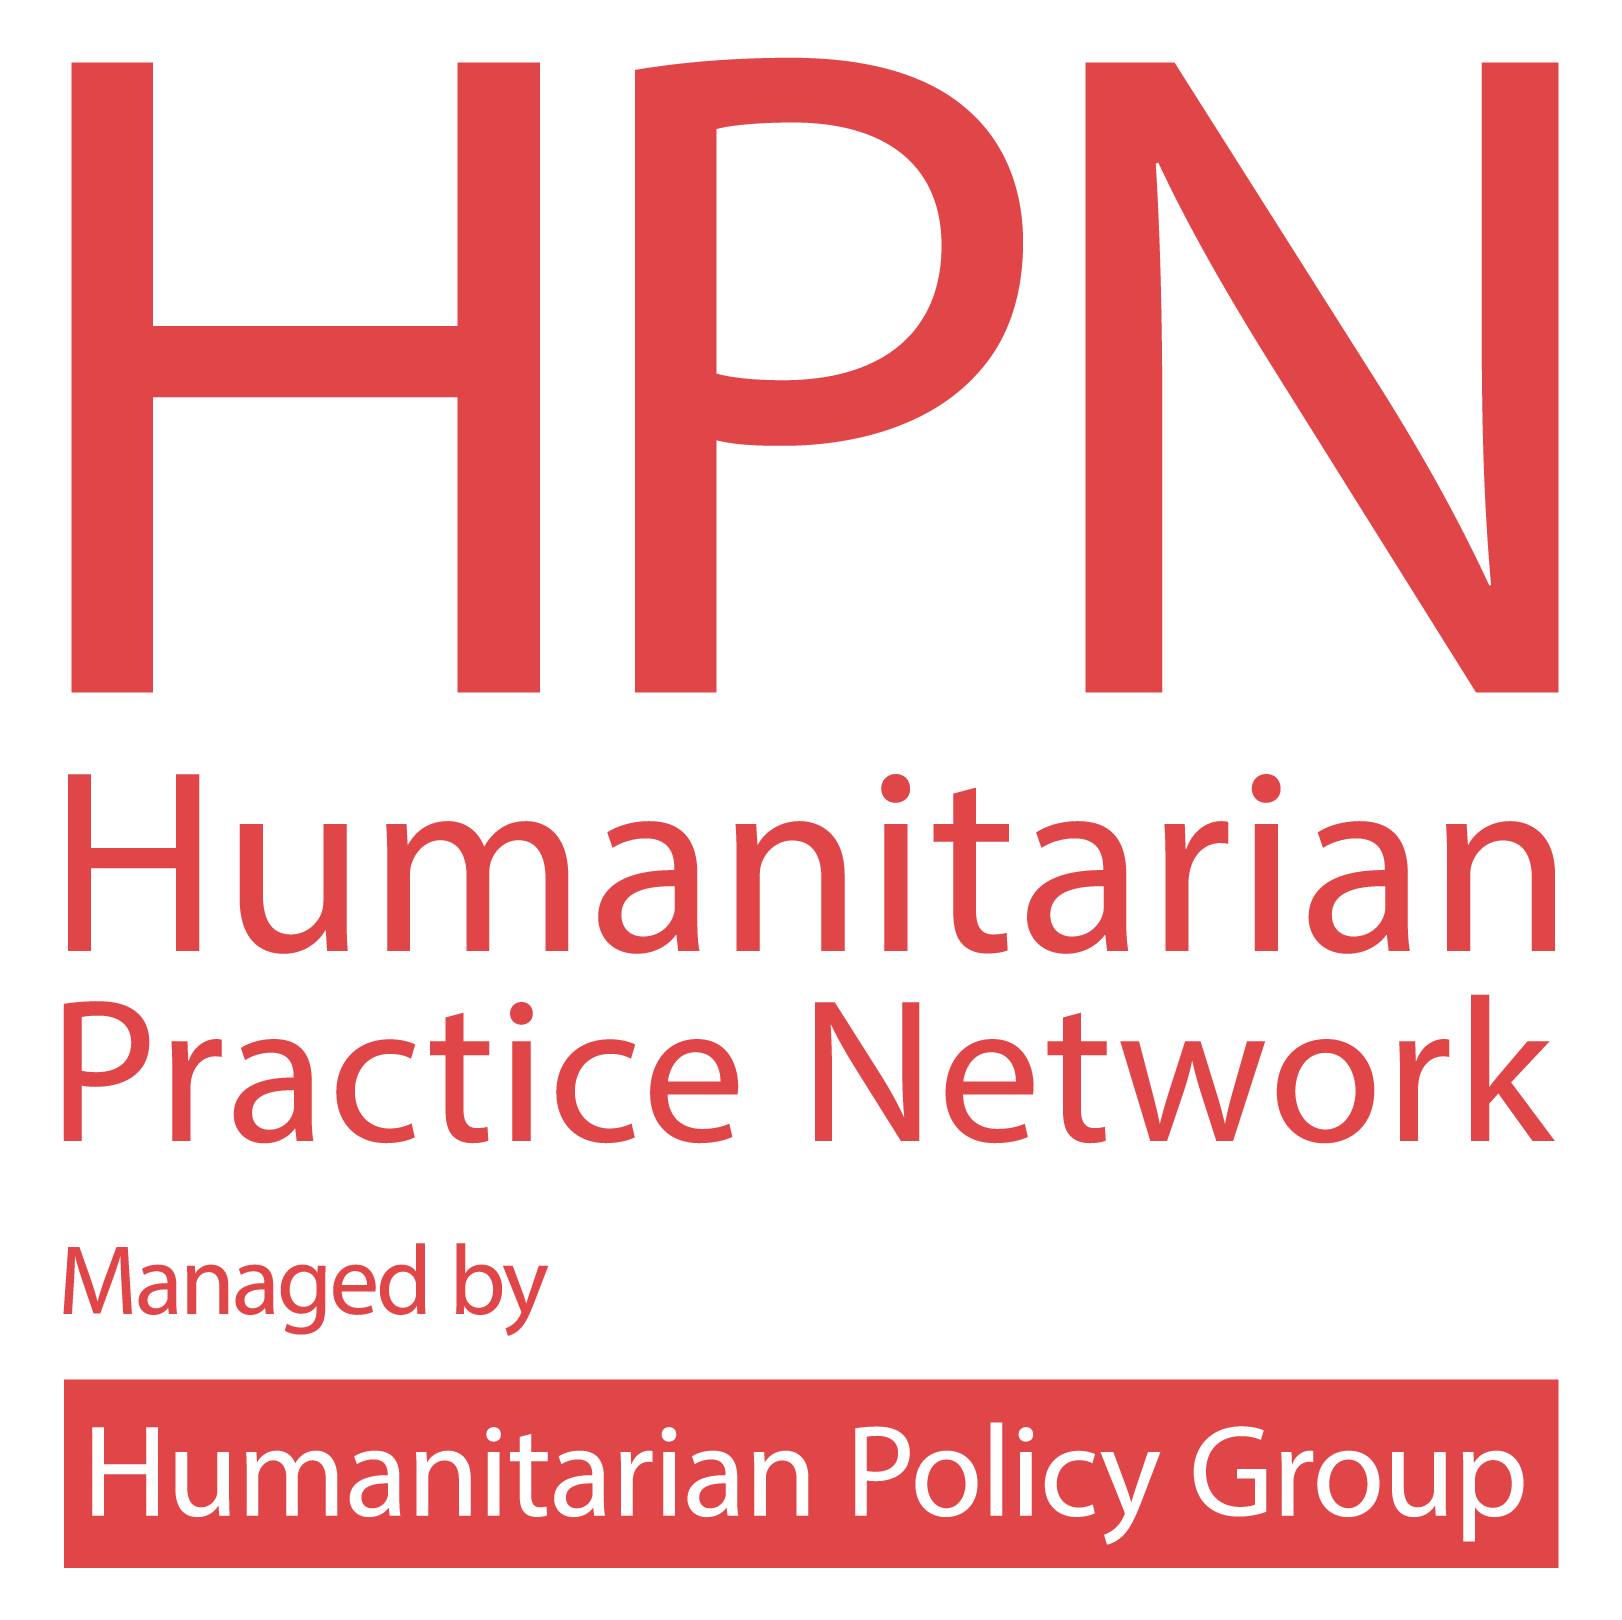 Humanitarian Practice Network